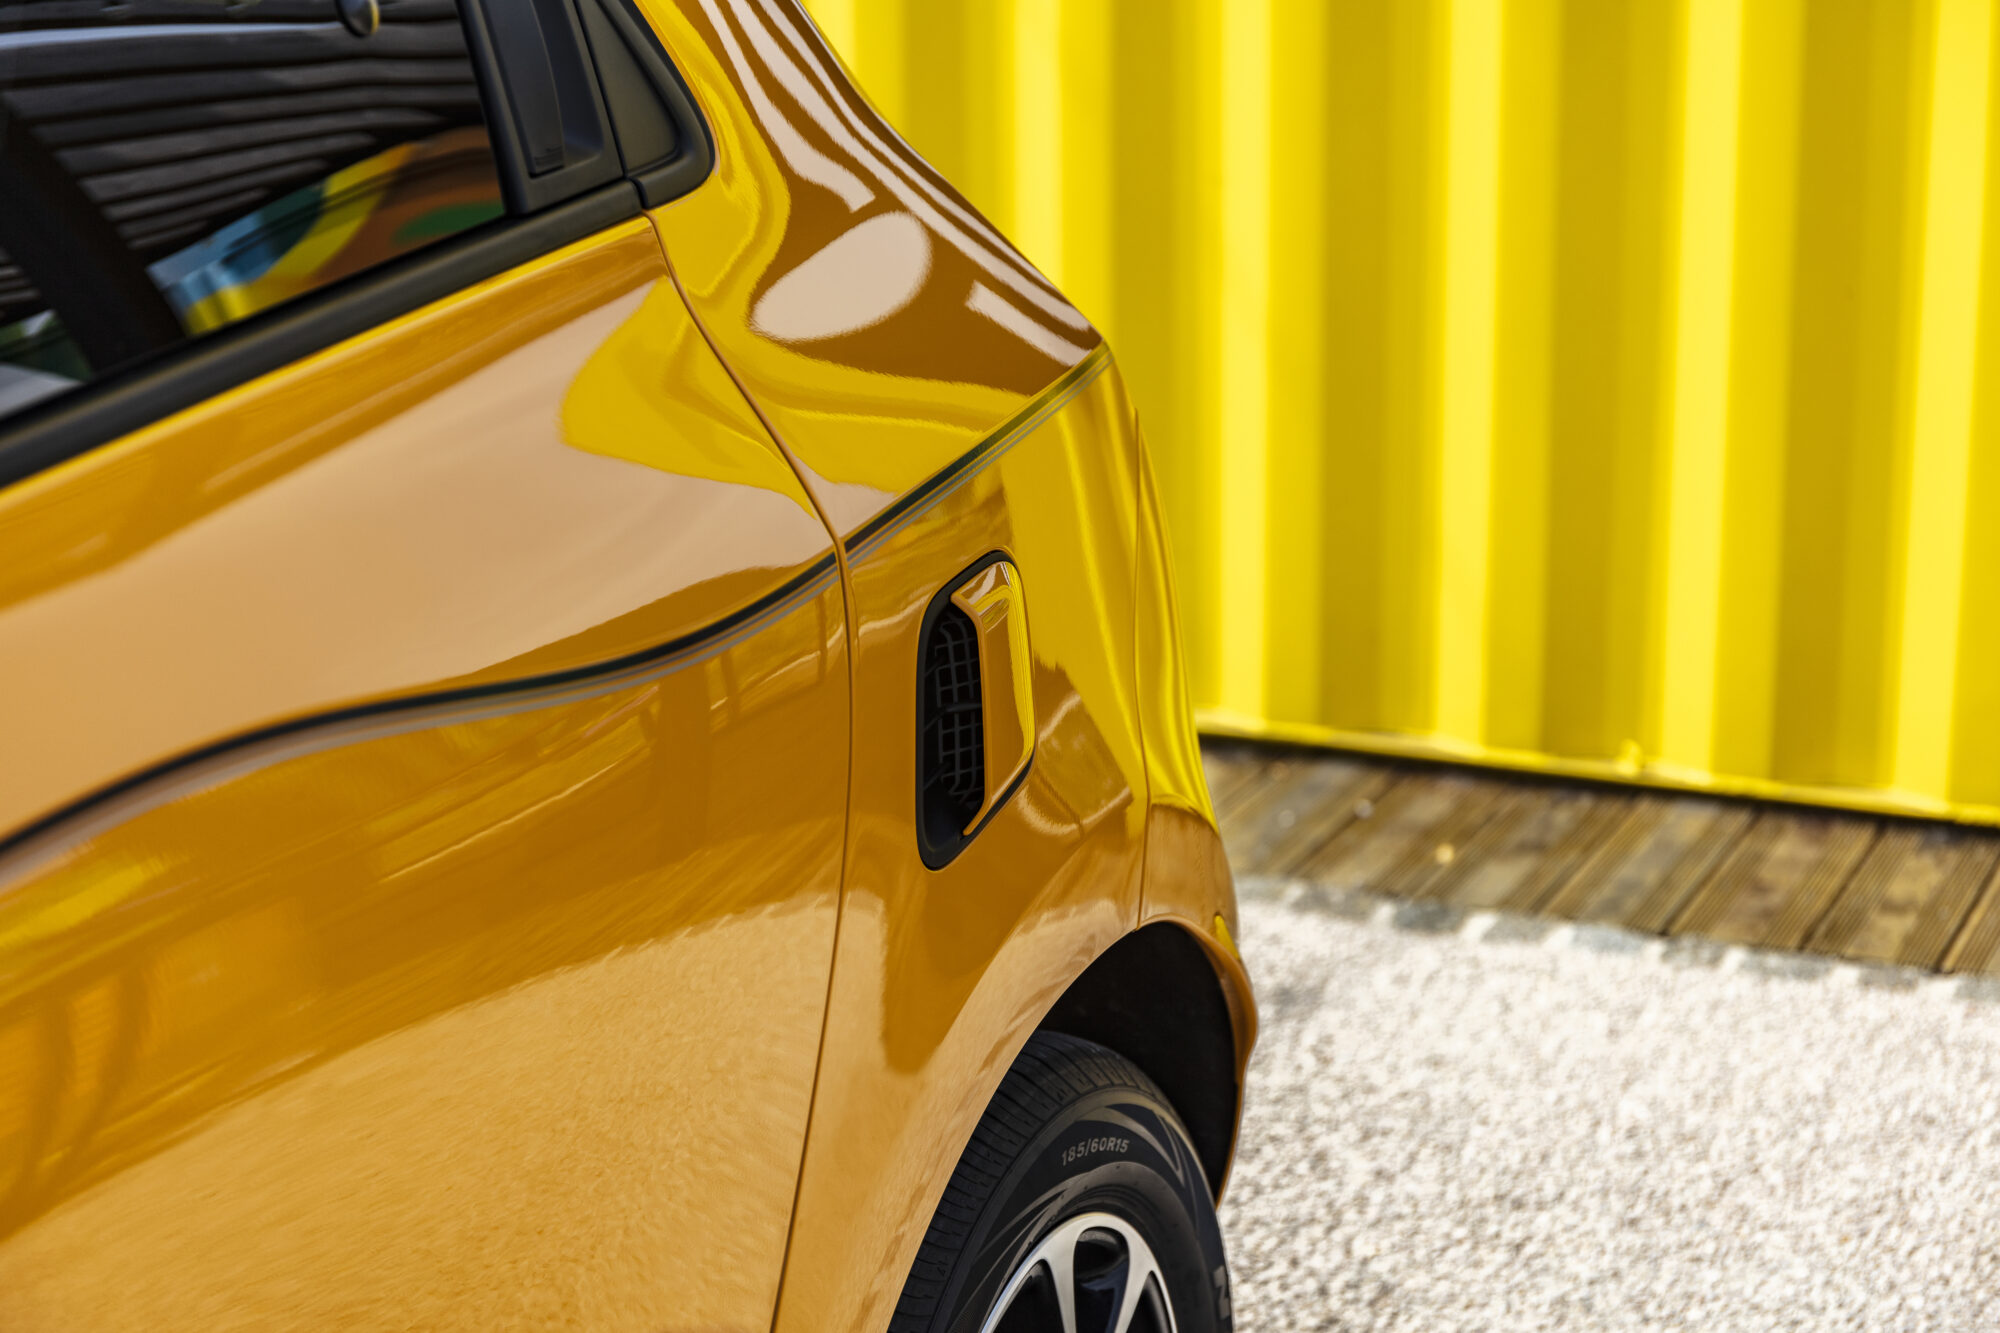 2019 - New Renault TWINGO